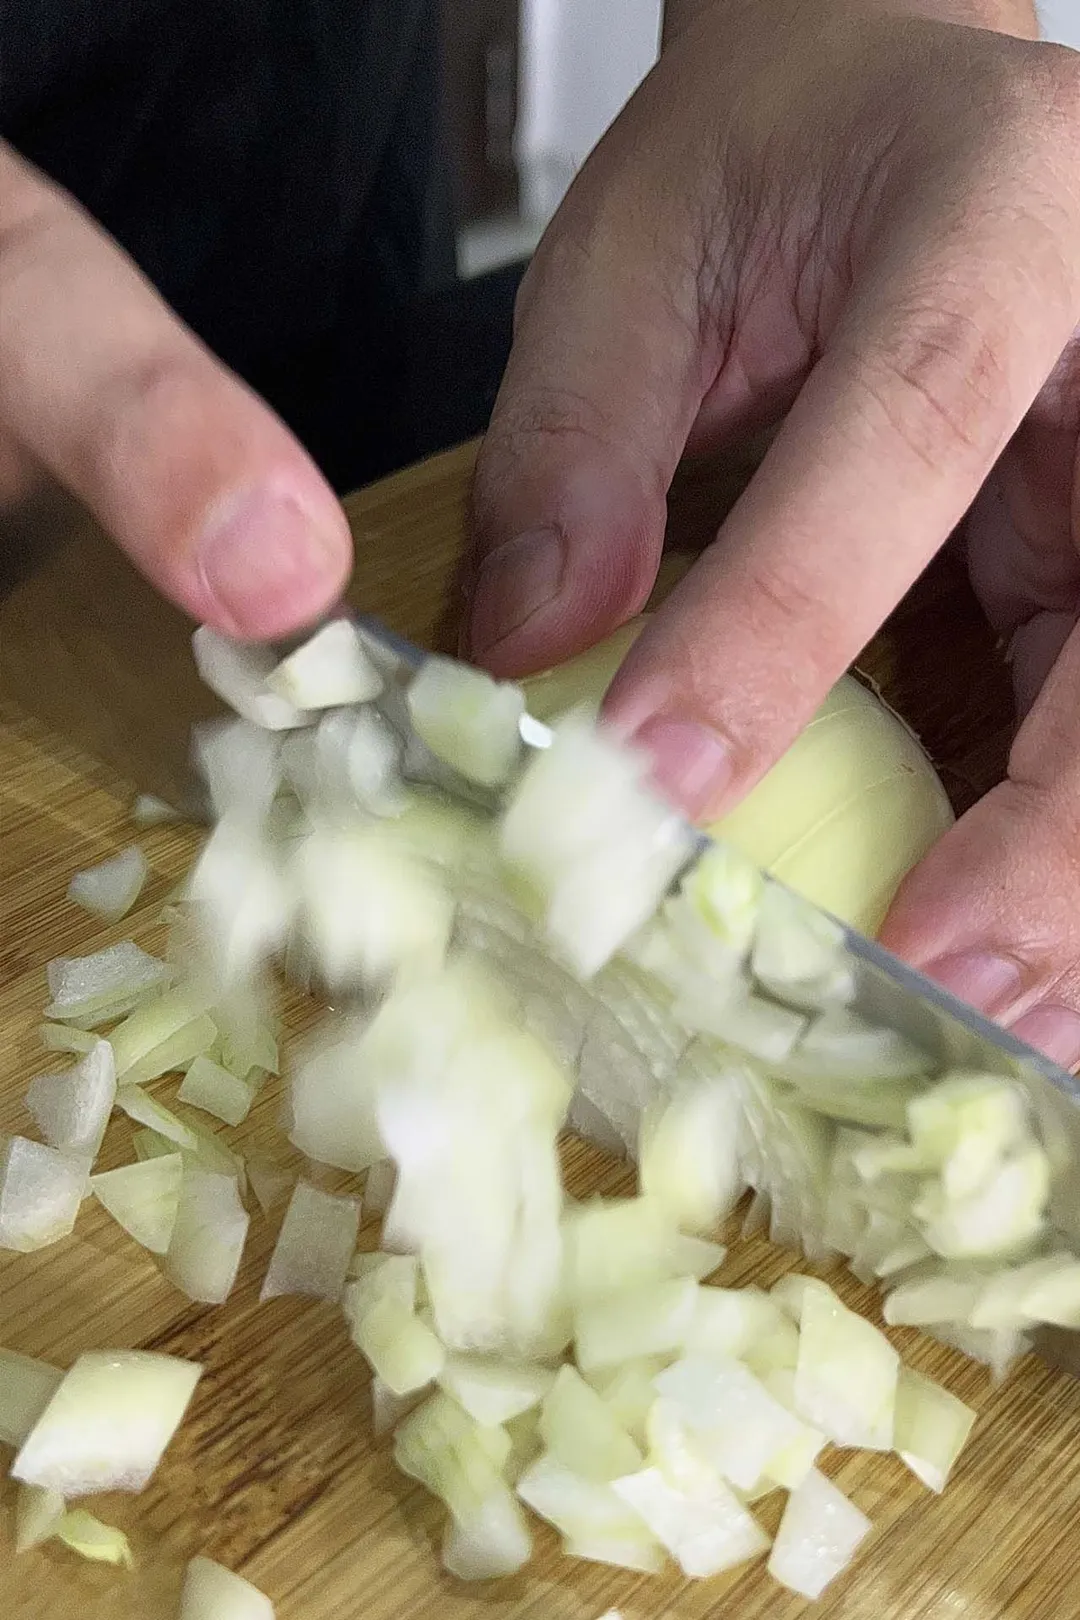 dicing onion